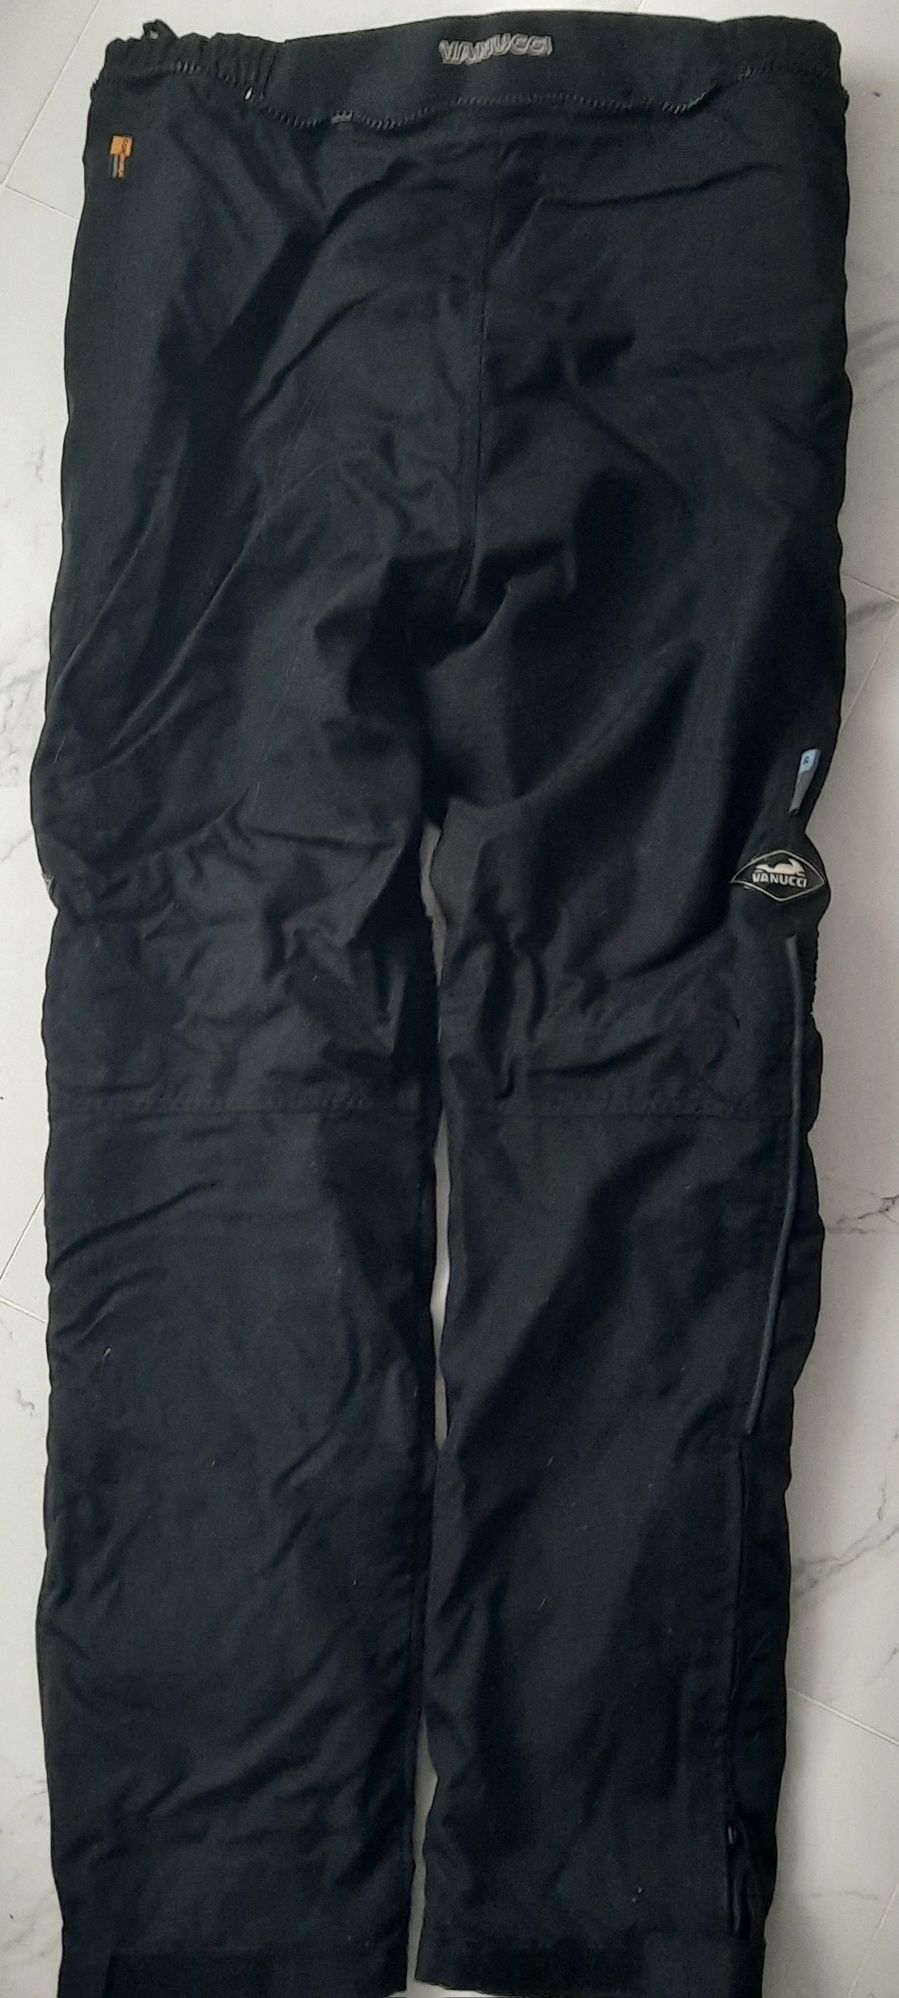 Spodnie Vanucci rozmiar XL